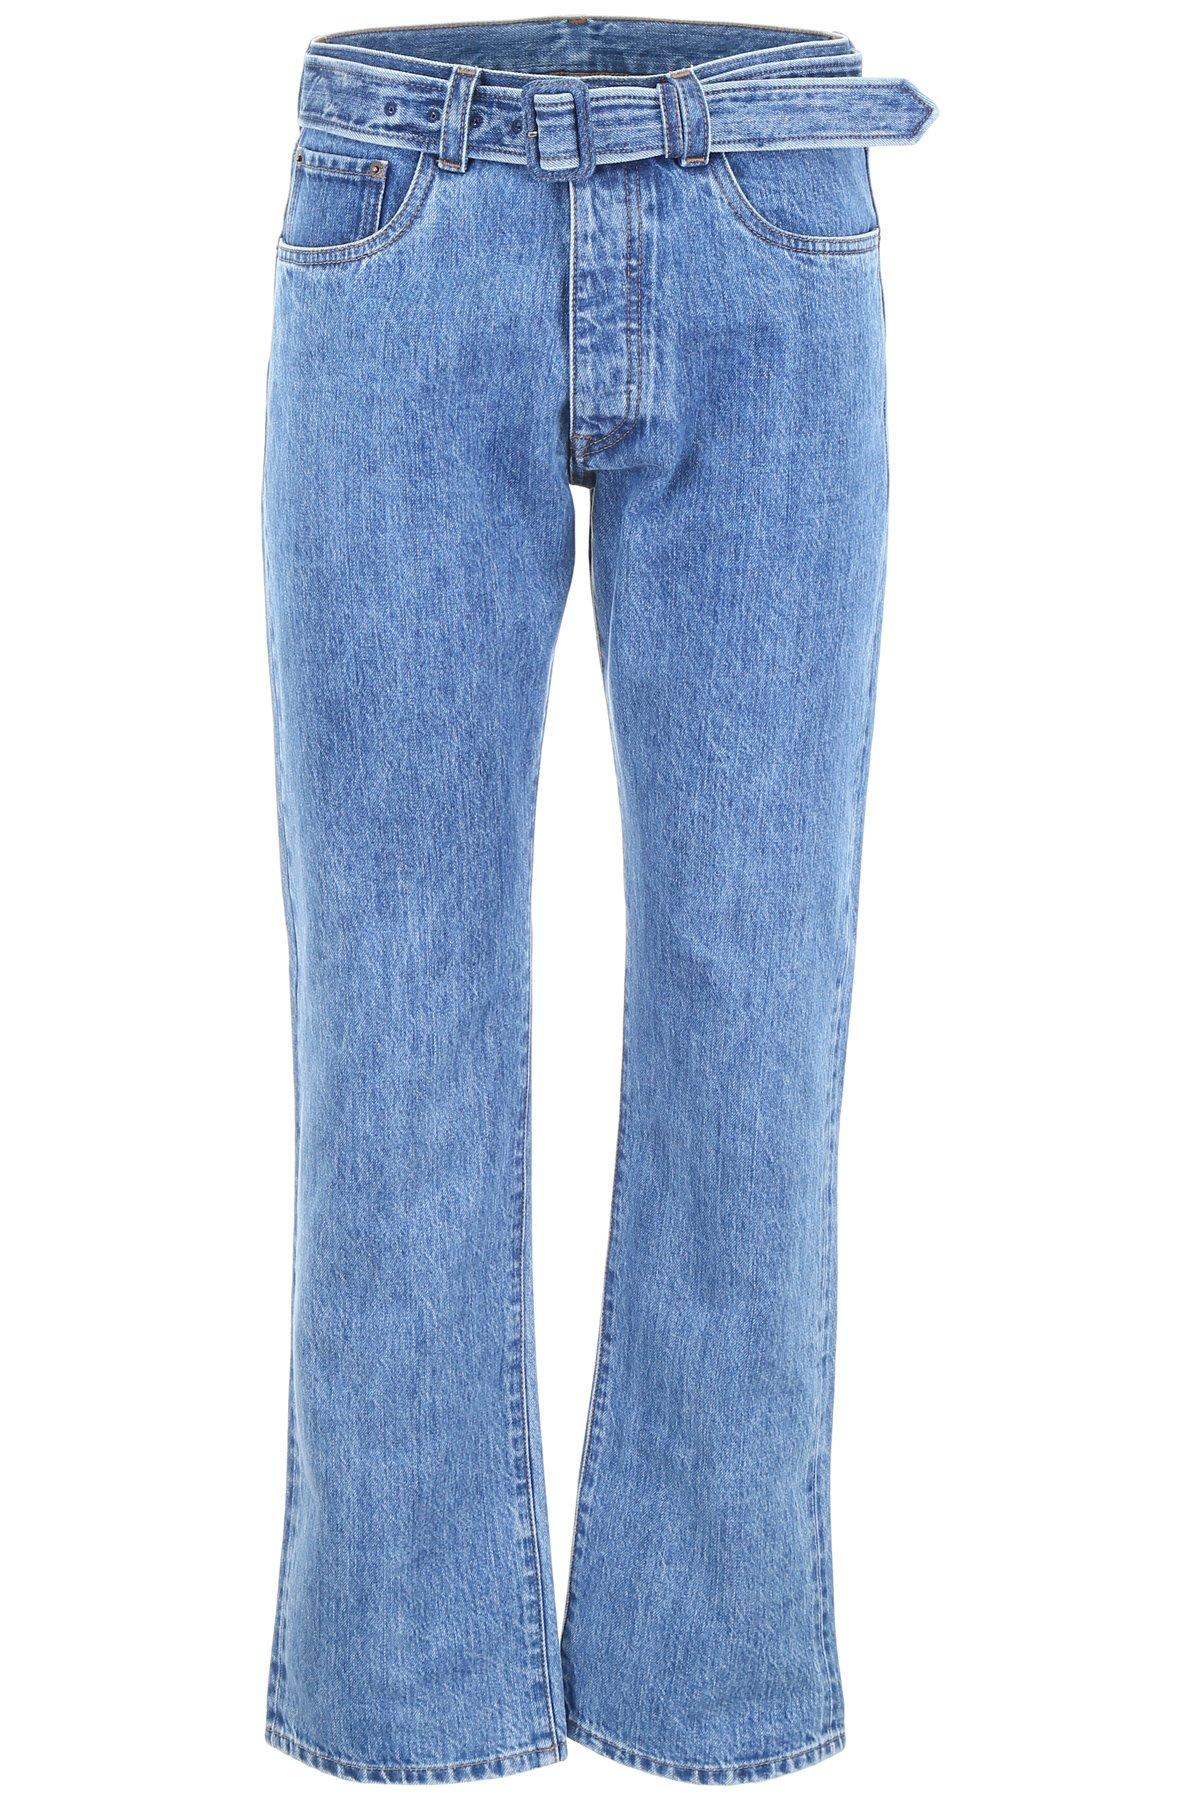 Prada Denim Belted Logo Jeans in Blue for Men - Lyst